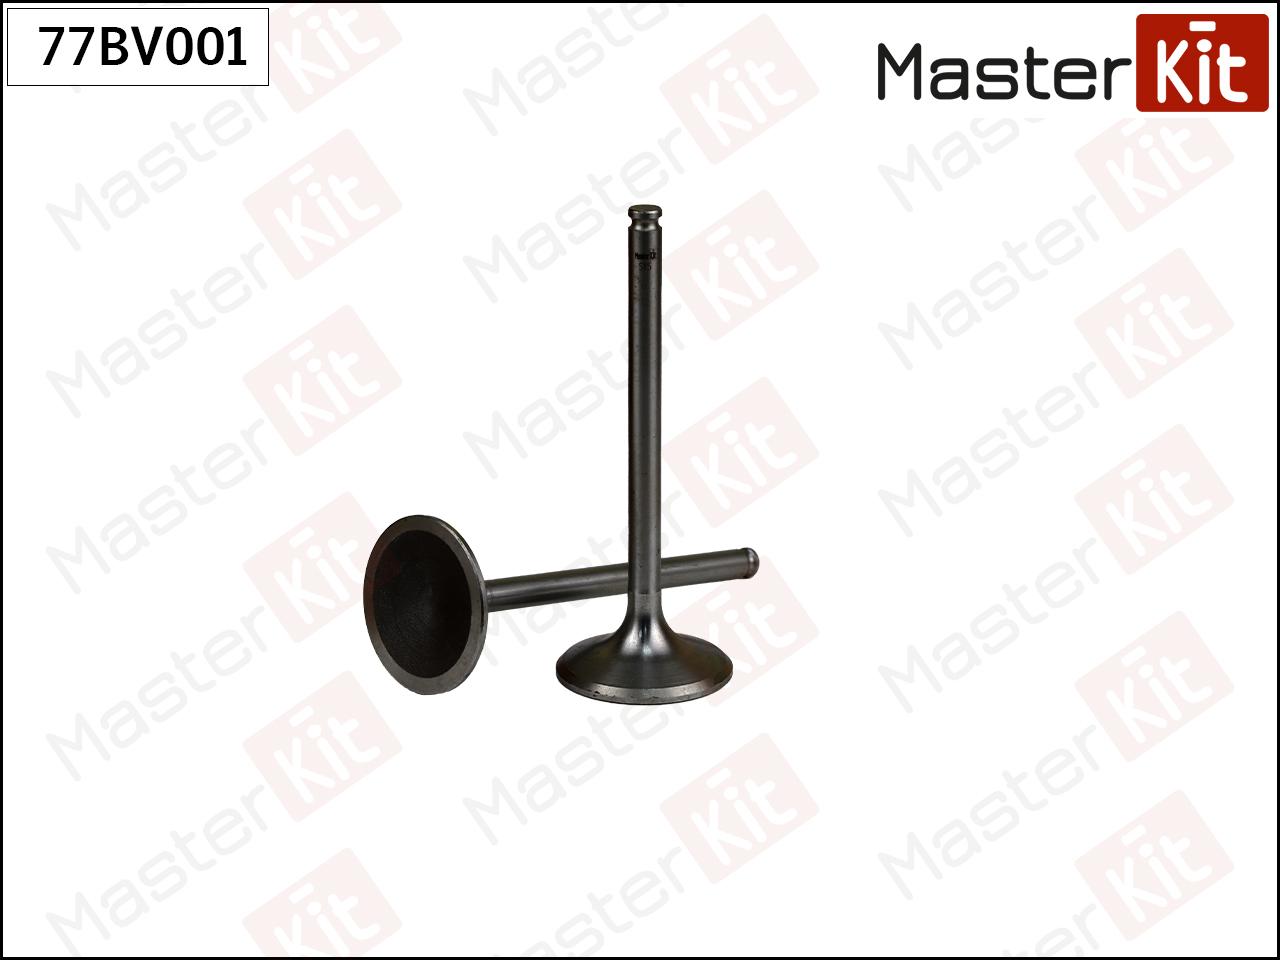 Клапан Впускной Mercedes-Benz M102 77bv001 MasterKit  77BV001